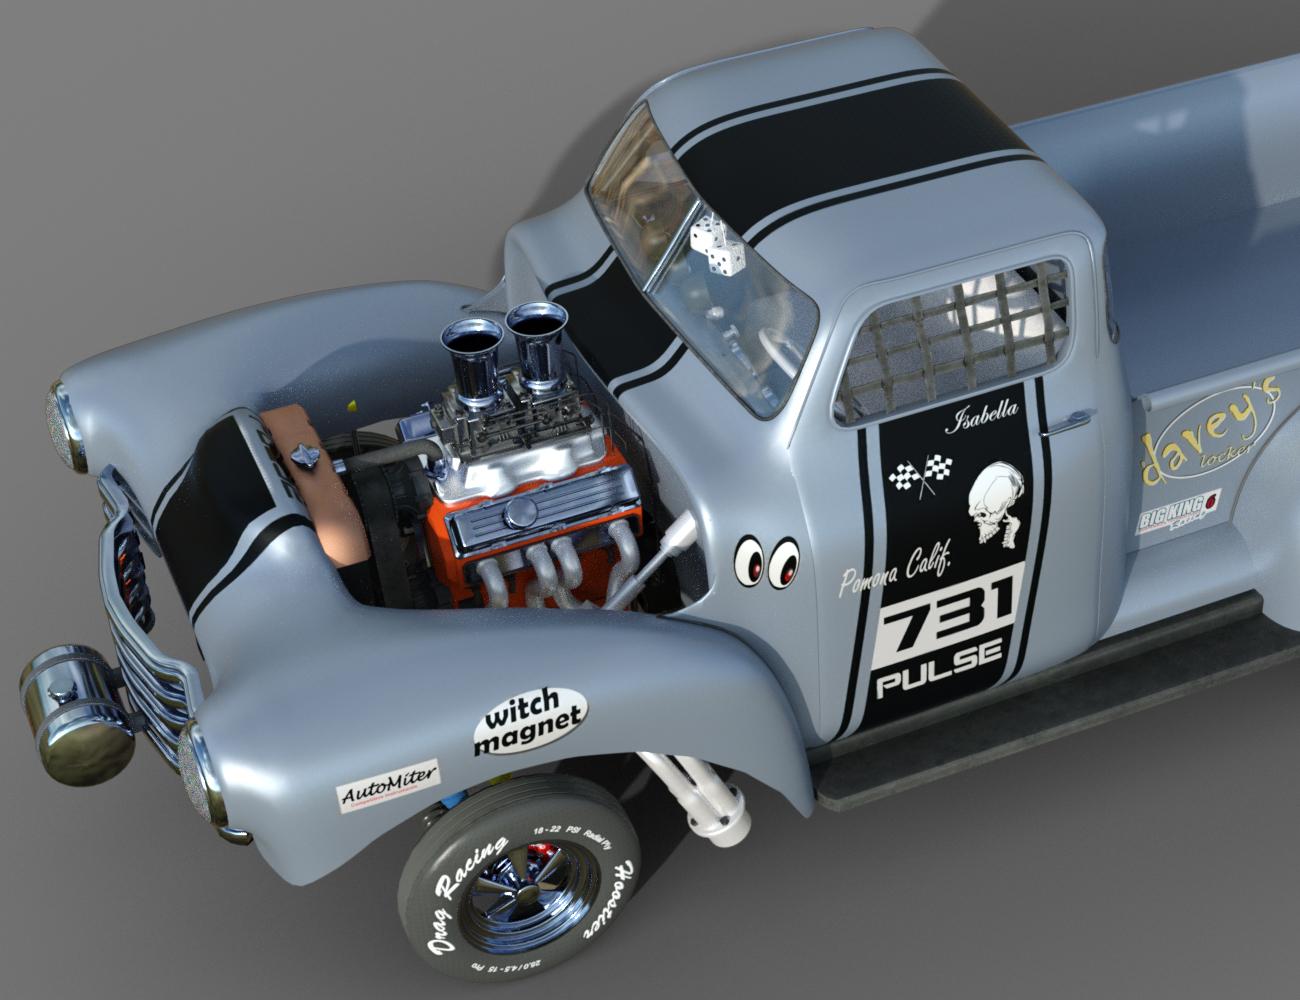 Gasser Muscle Car by: DarkEdgeDesign, 3D Models by Daz 3D